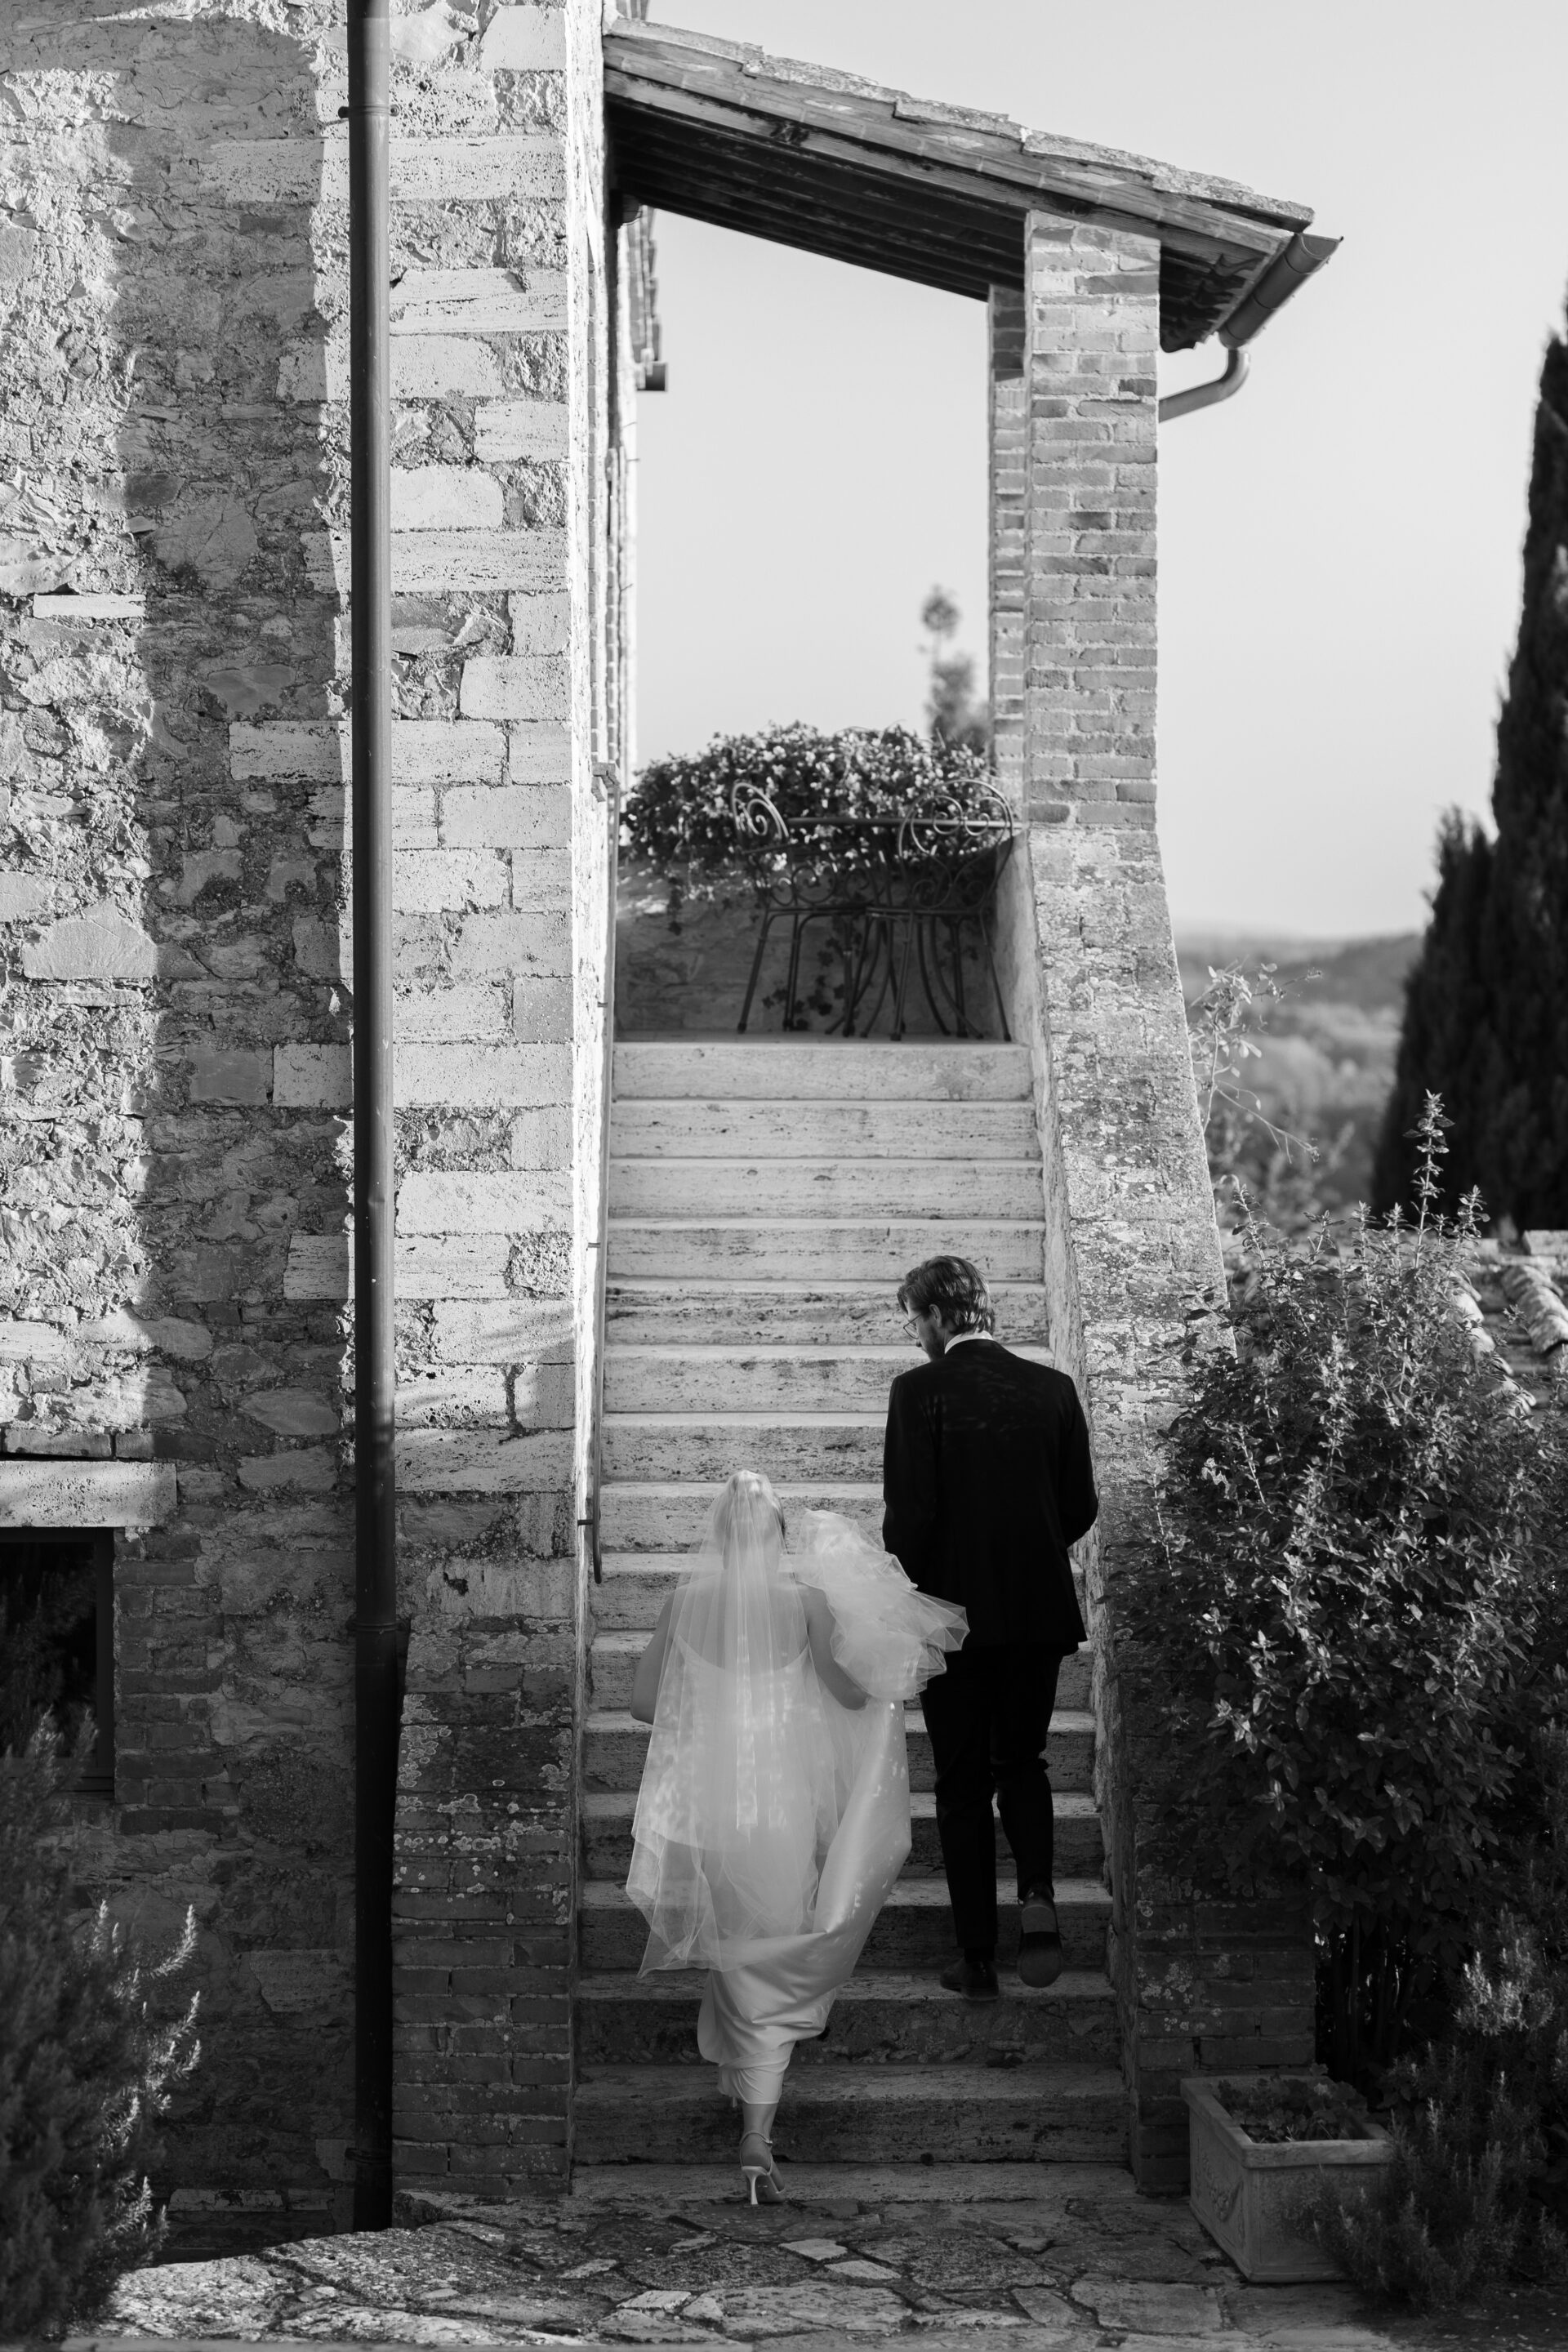 Italian wedding photography captures editorial bride and groom portraits